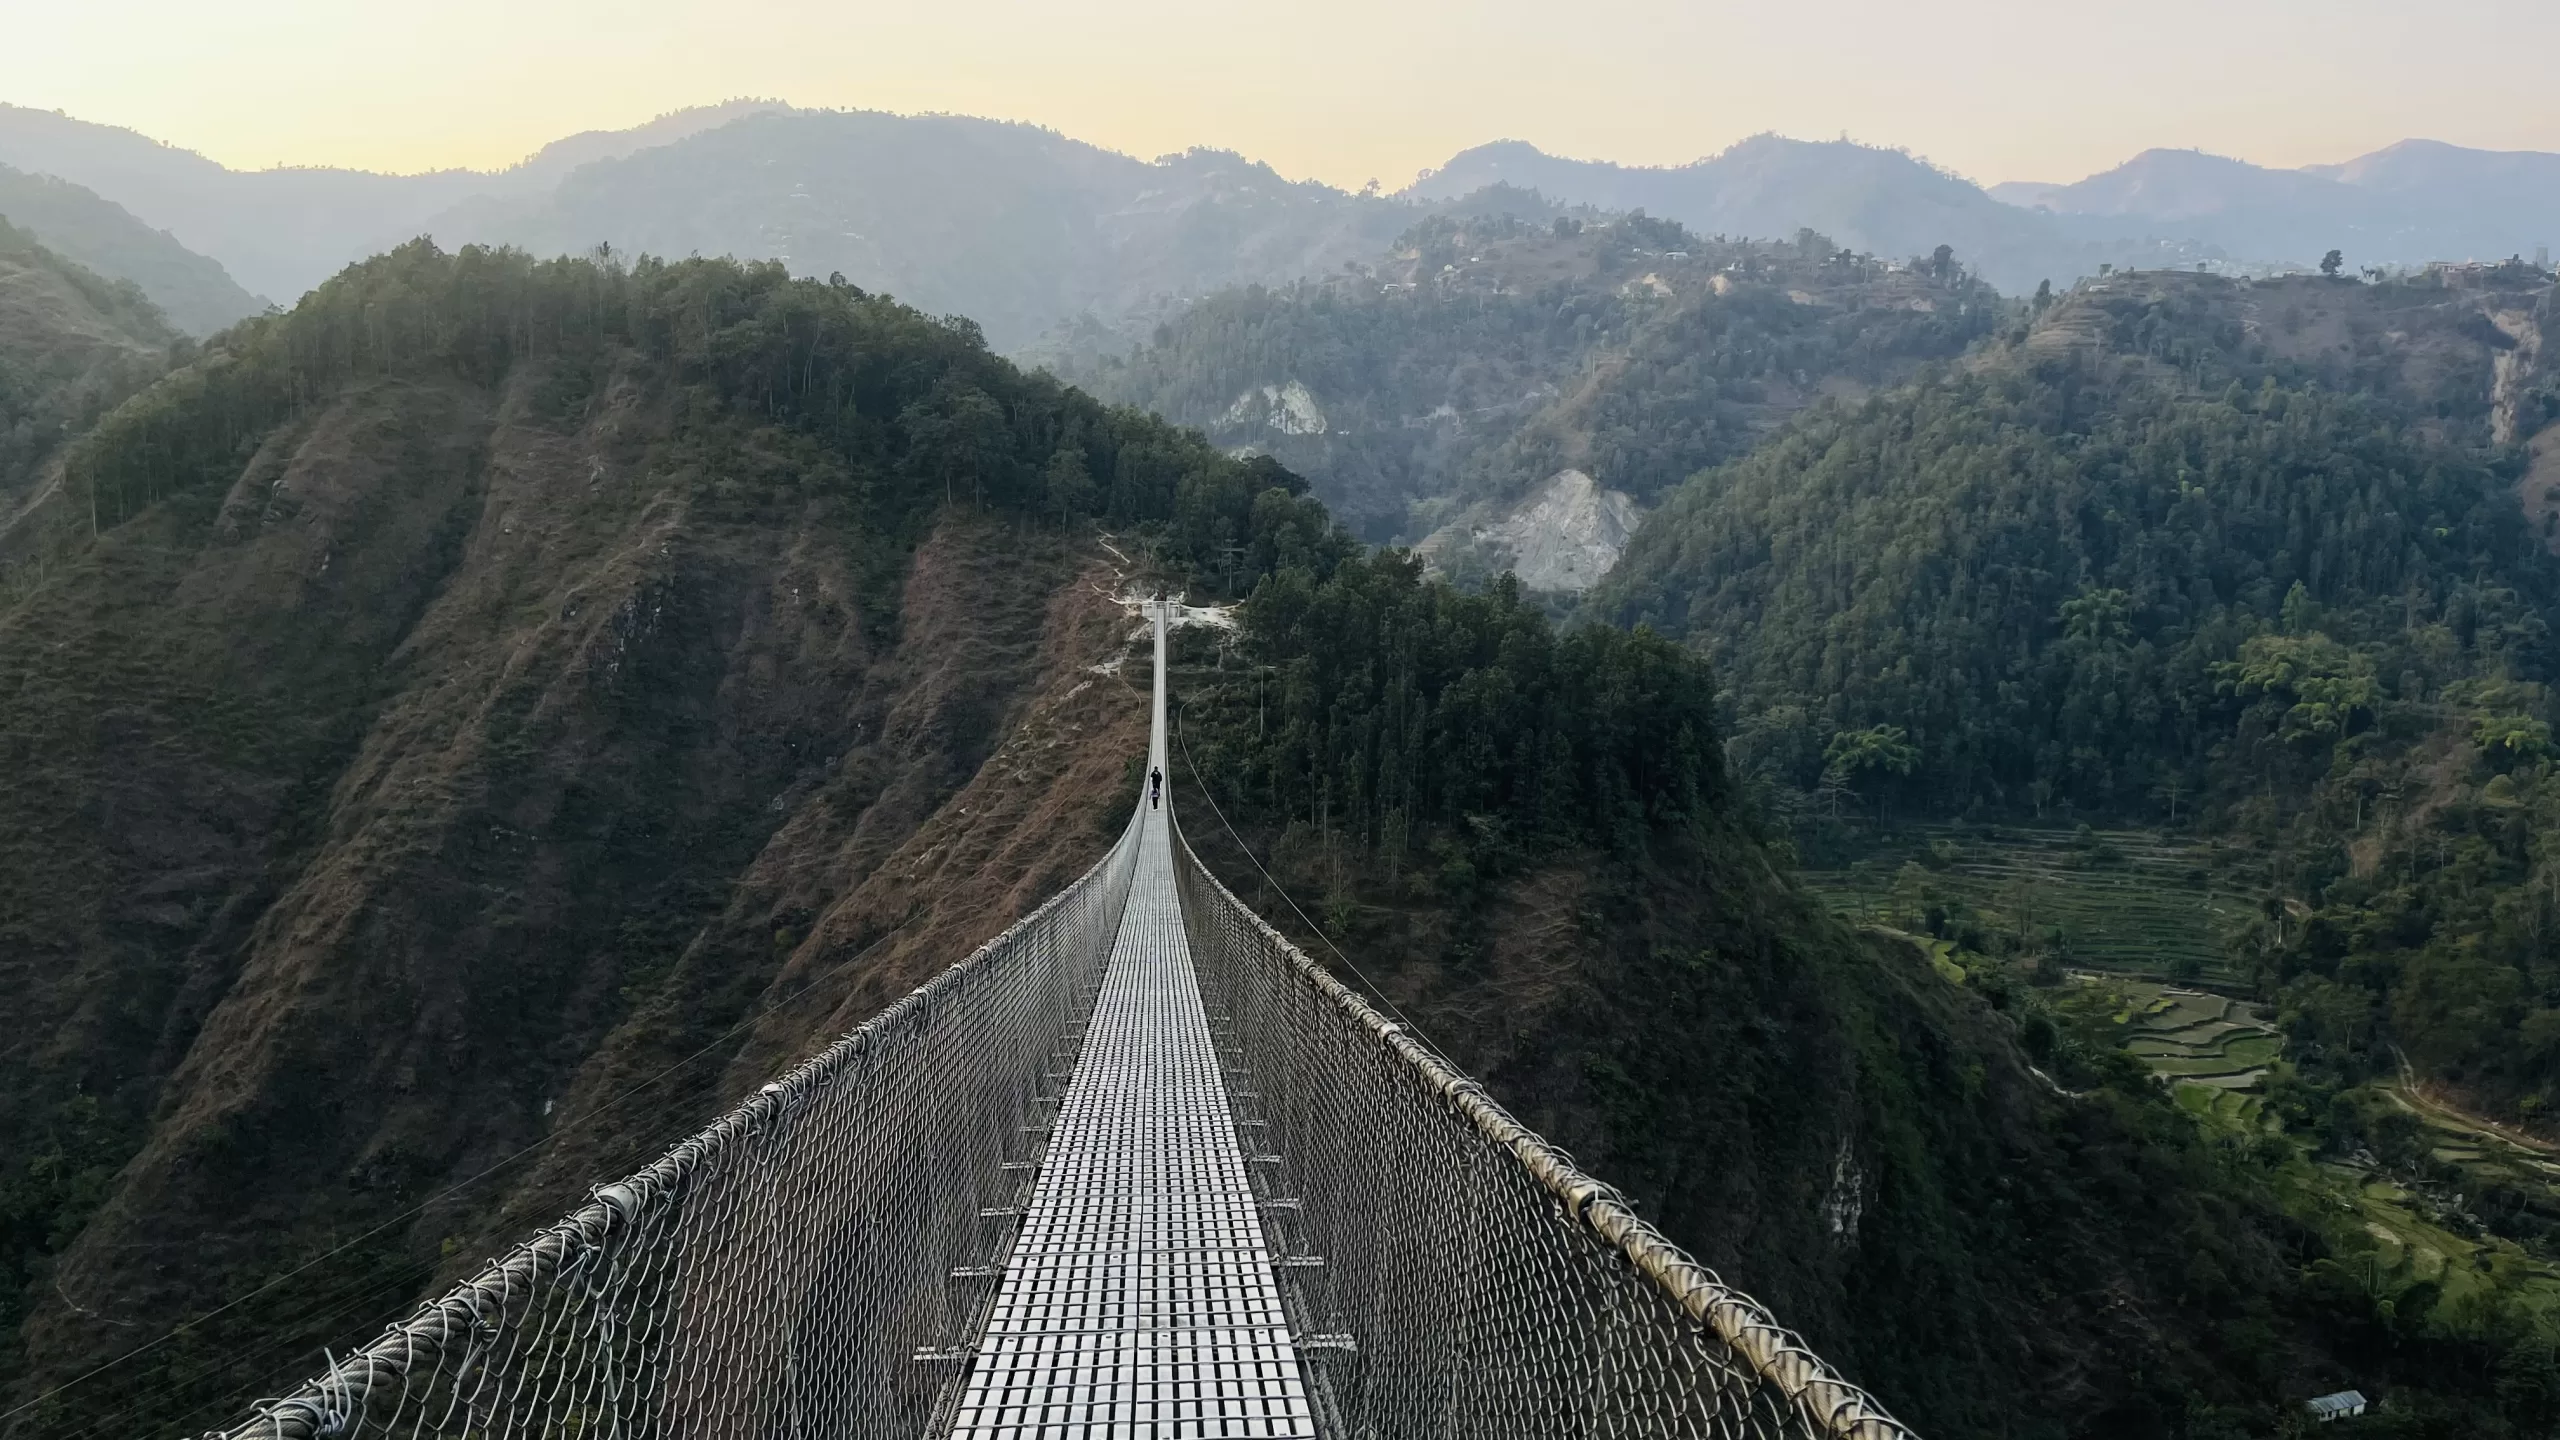 Suspension bridge connecting mountains.